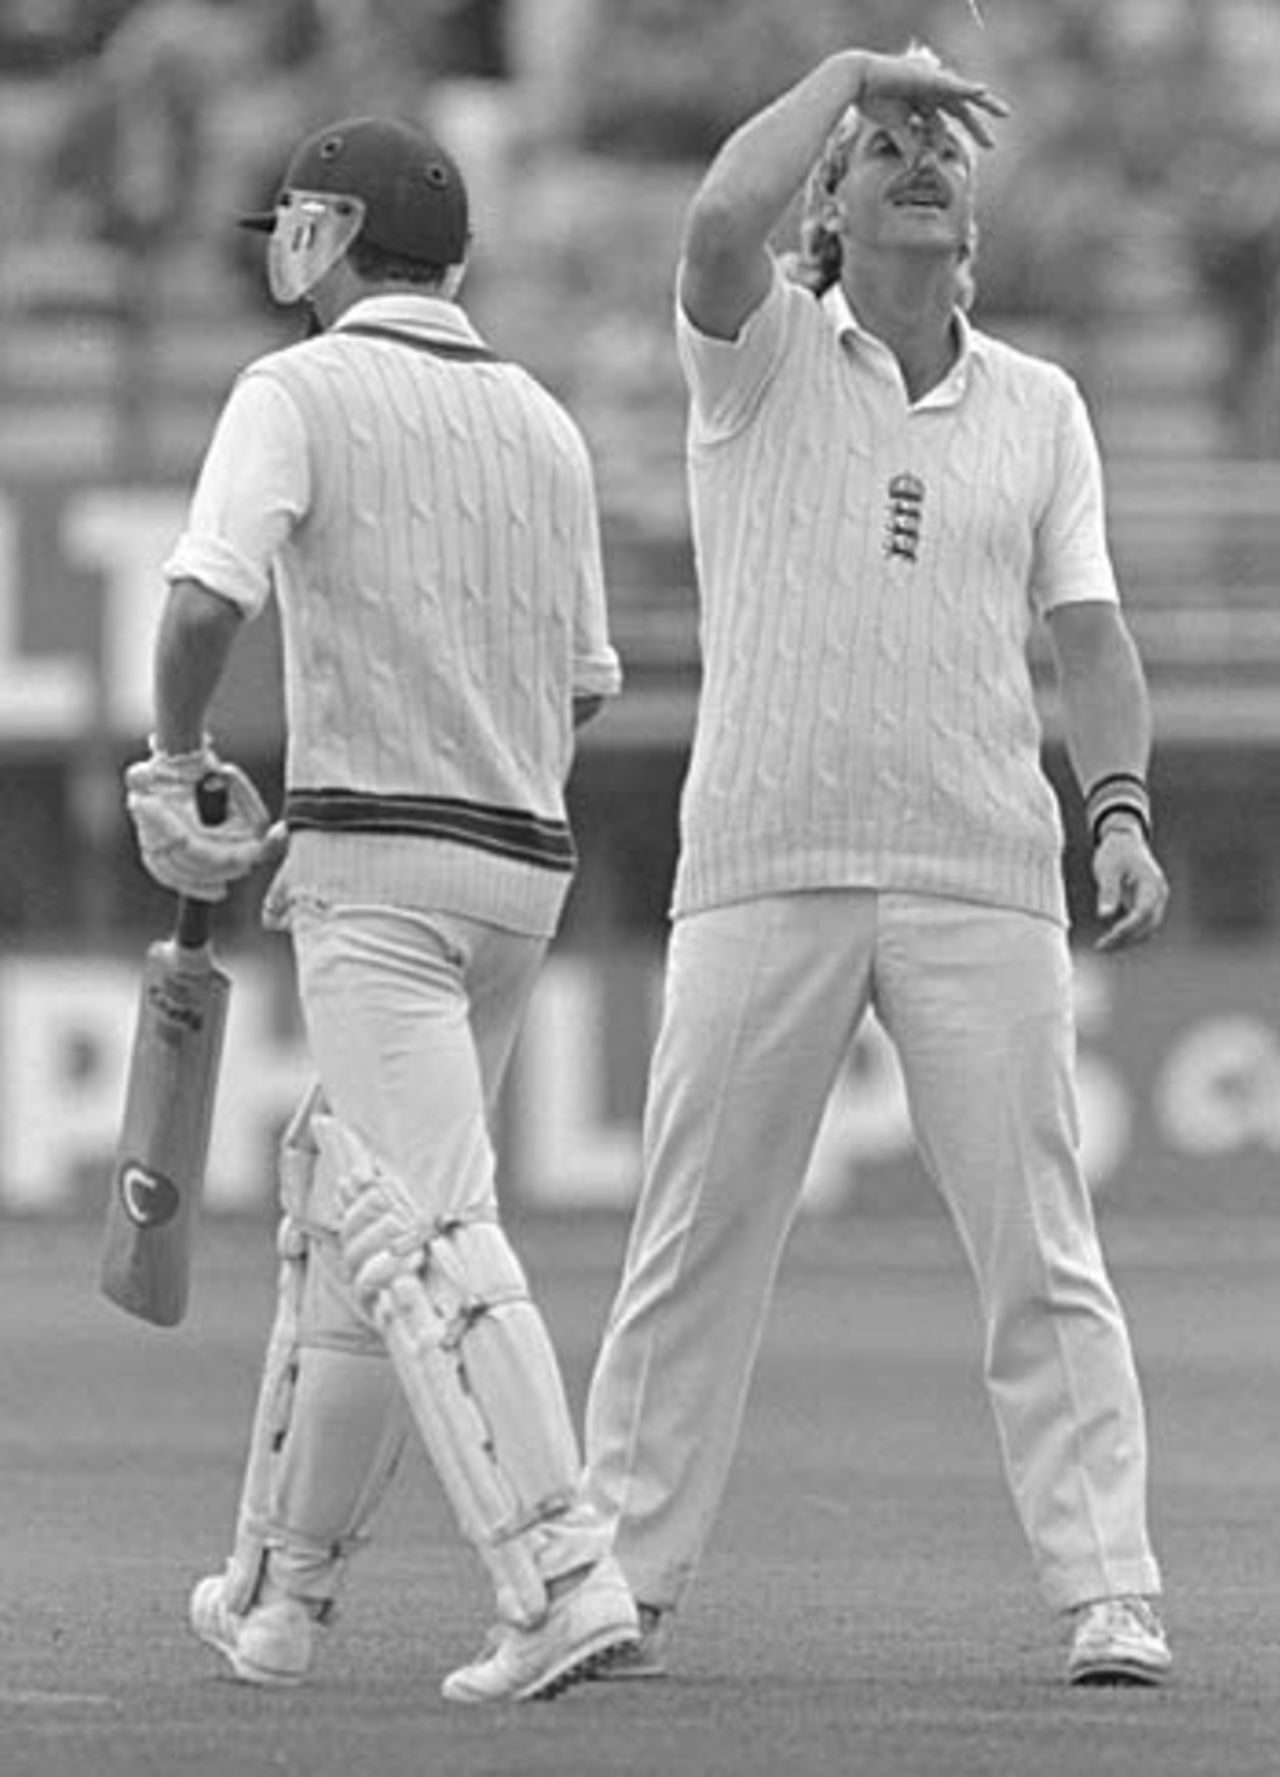 Ian Botham gestures as Kepler Wessels arrives at the crease, England v Australia, 5th Test, Edgbaston, August 1985